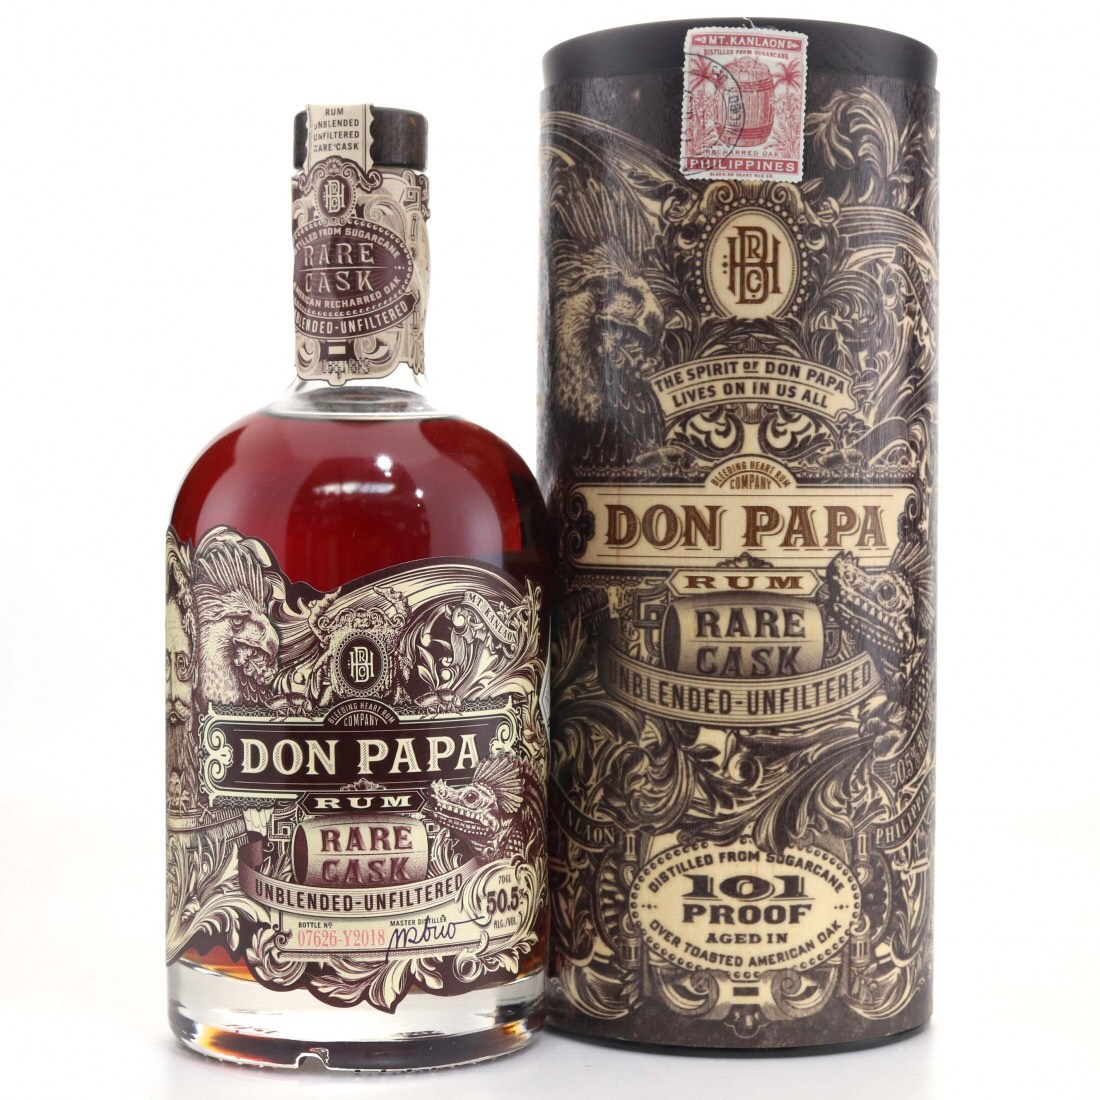 Bottle image of Don Papa Rare Cask